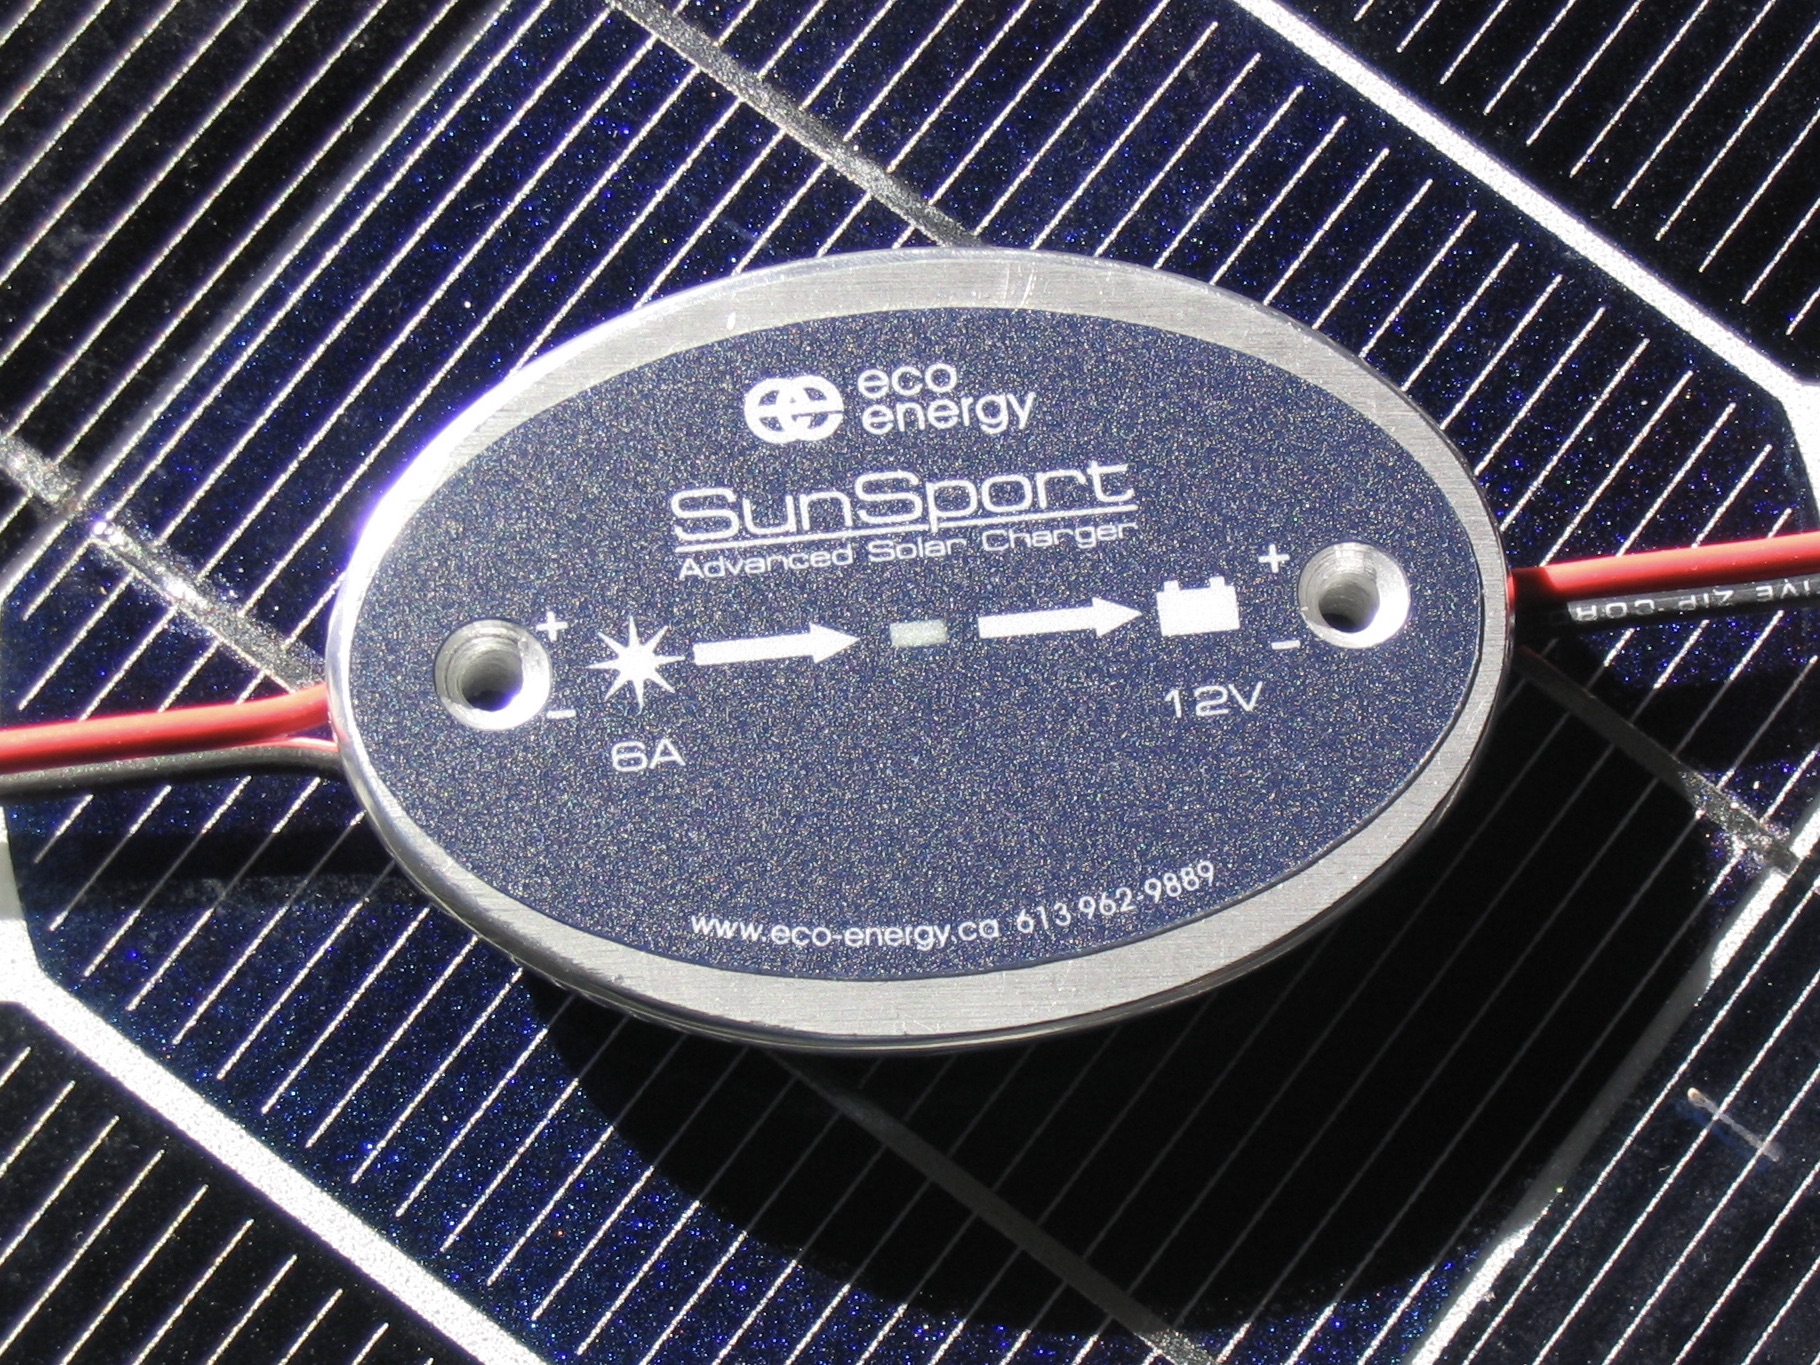 Sun Sport Control on a solar panel